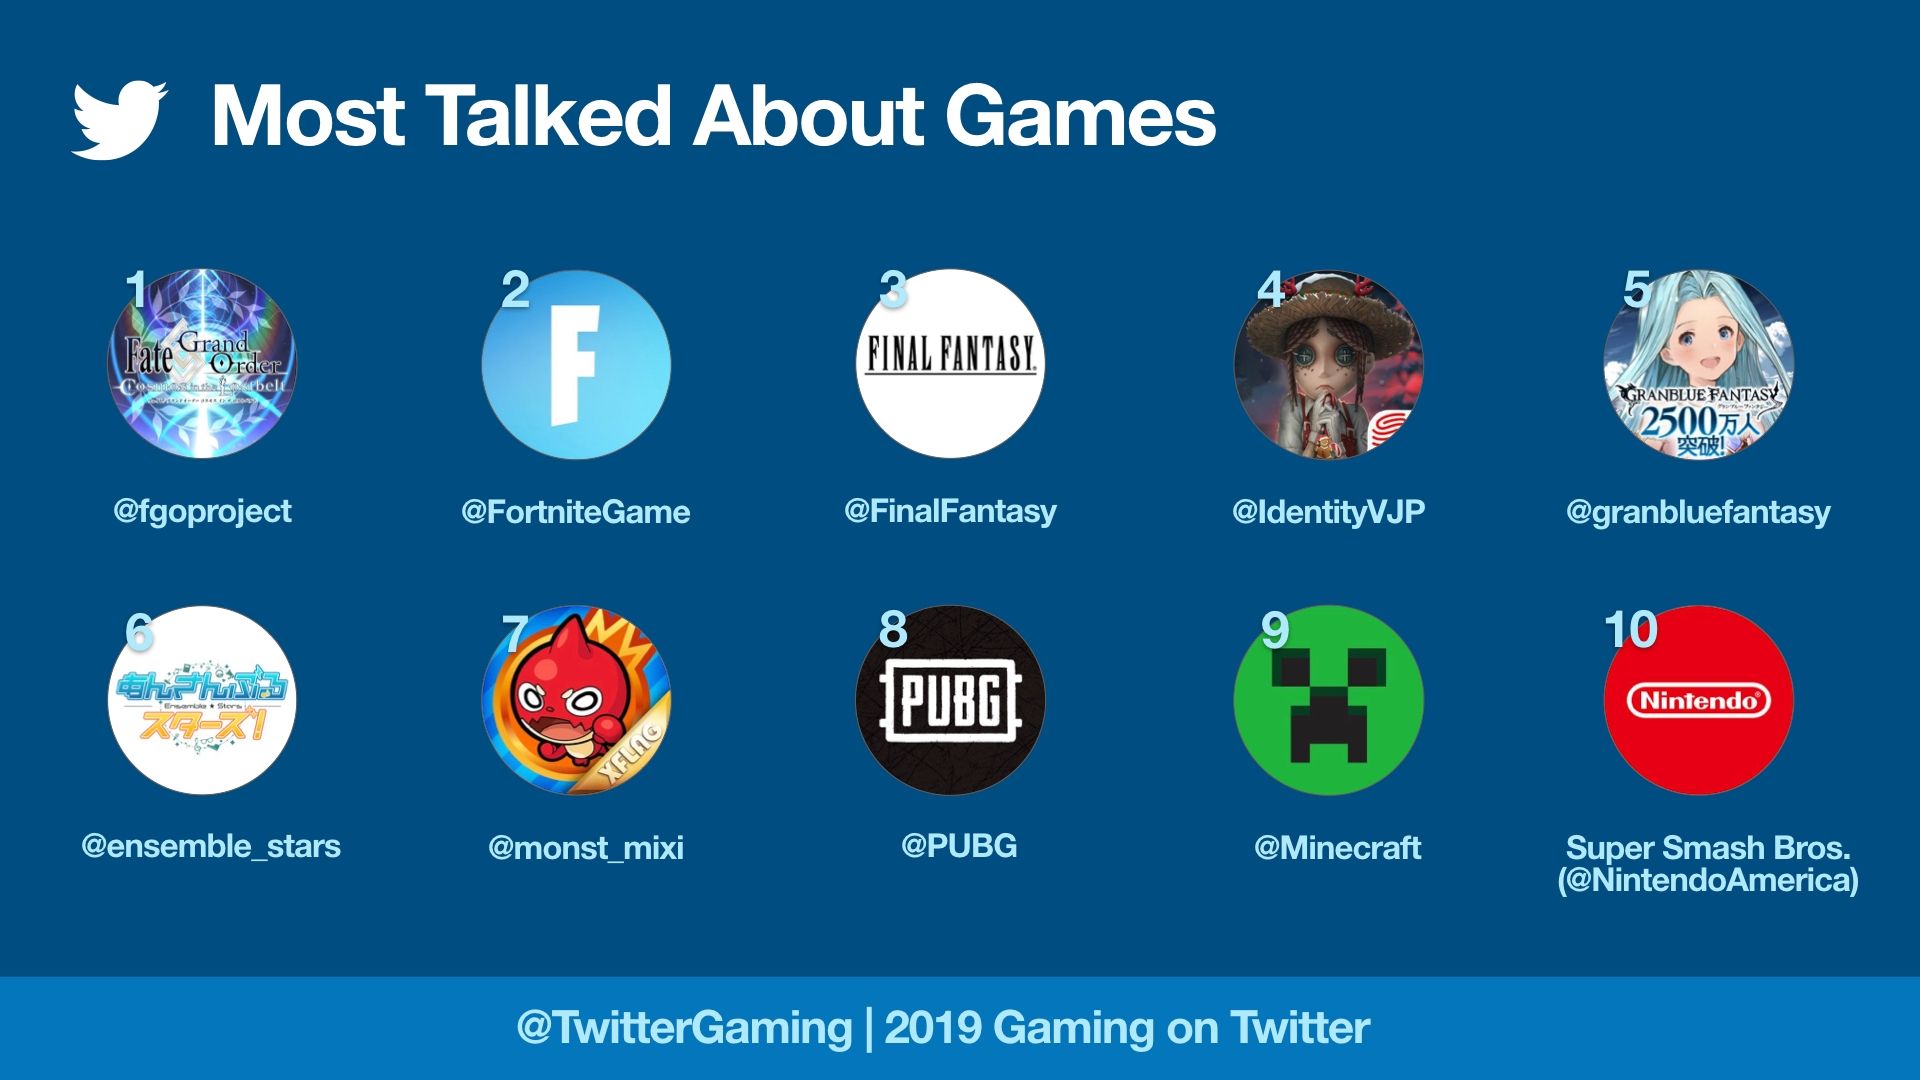 Источник: blog.twitter.com/en_us/topics/events/2019/2019-gaming-on-twitter.html